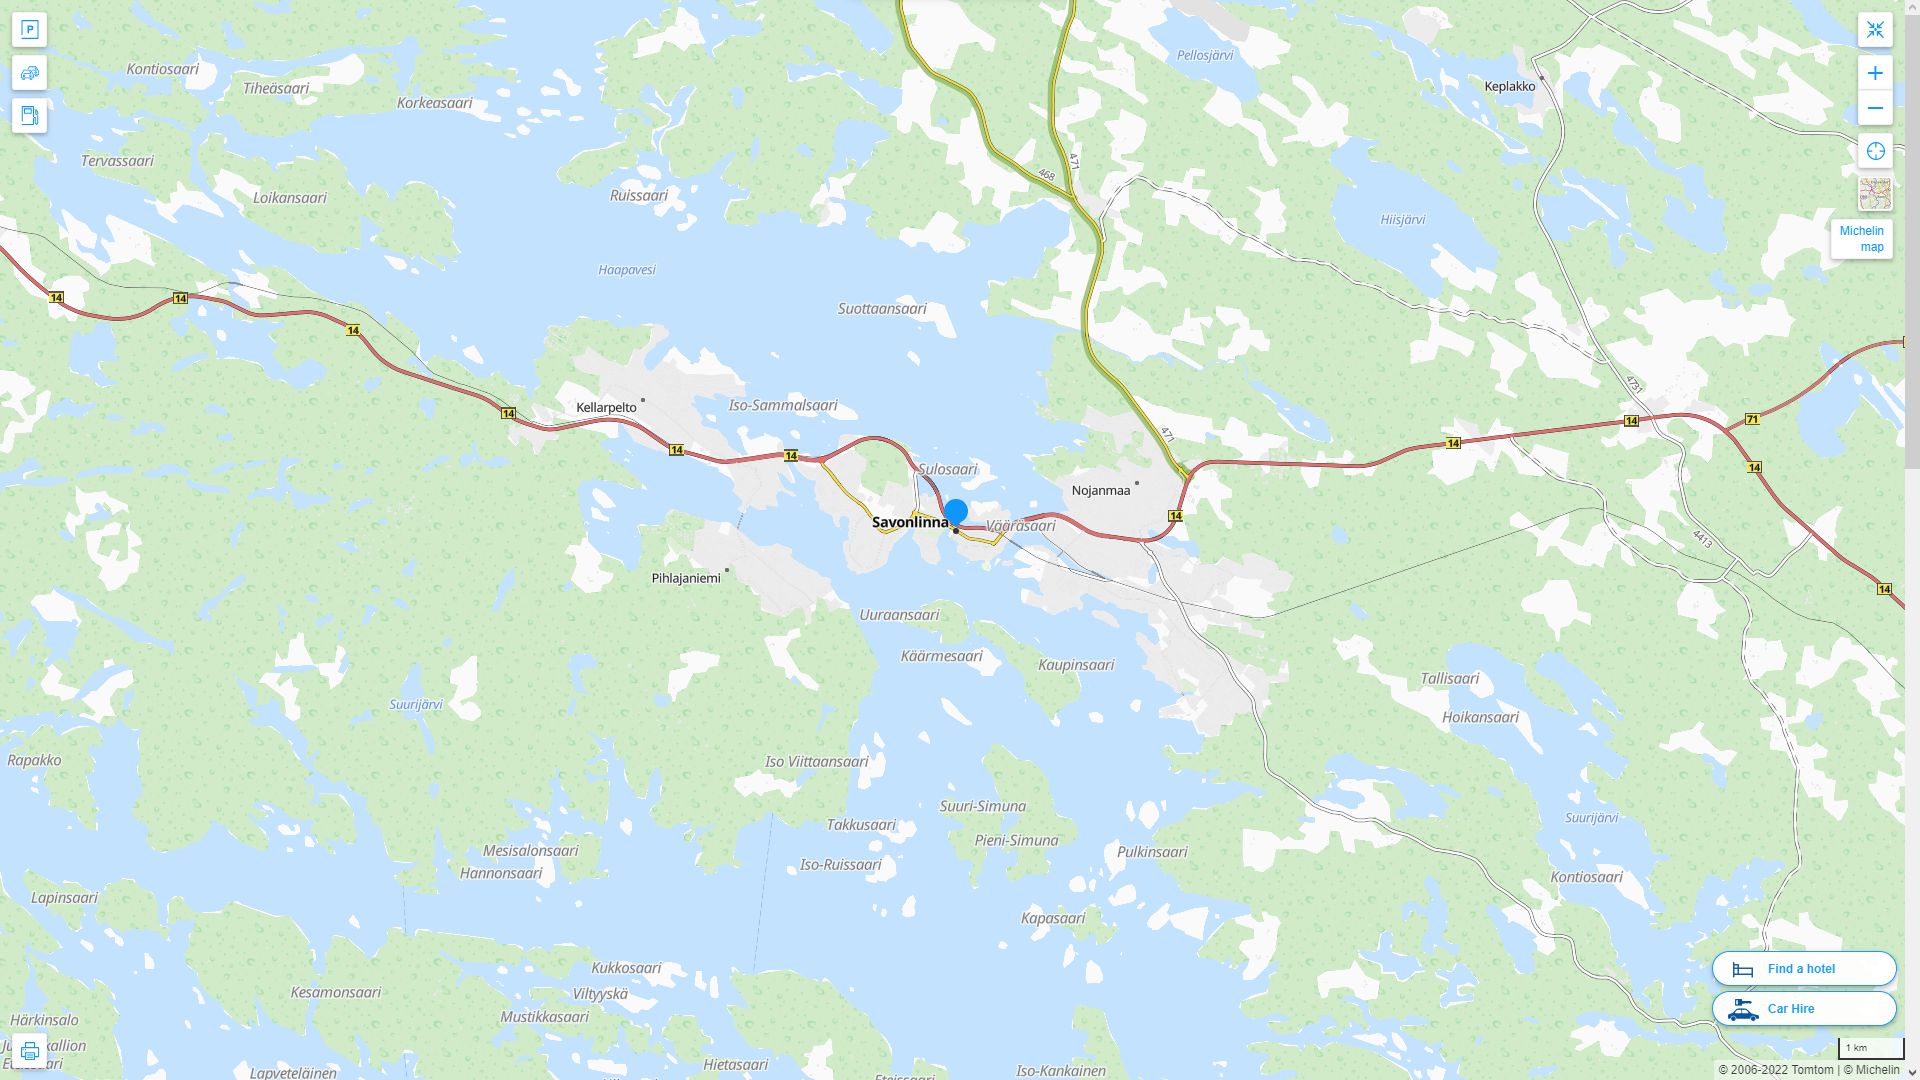 Savonlinna Map